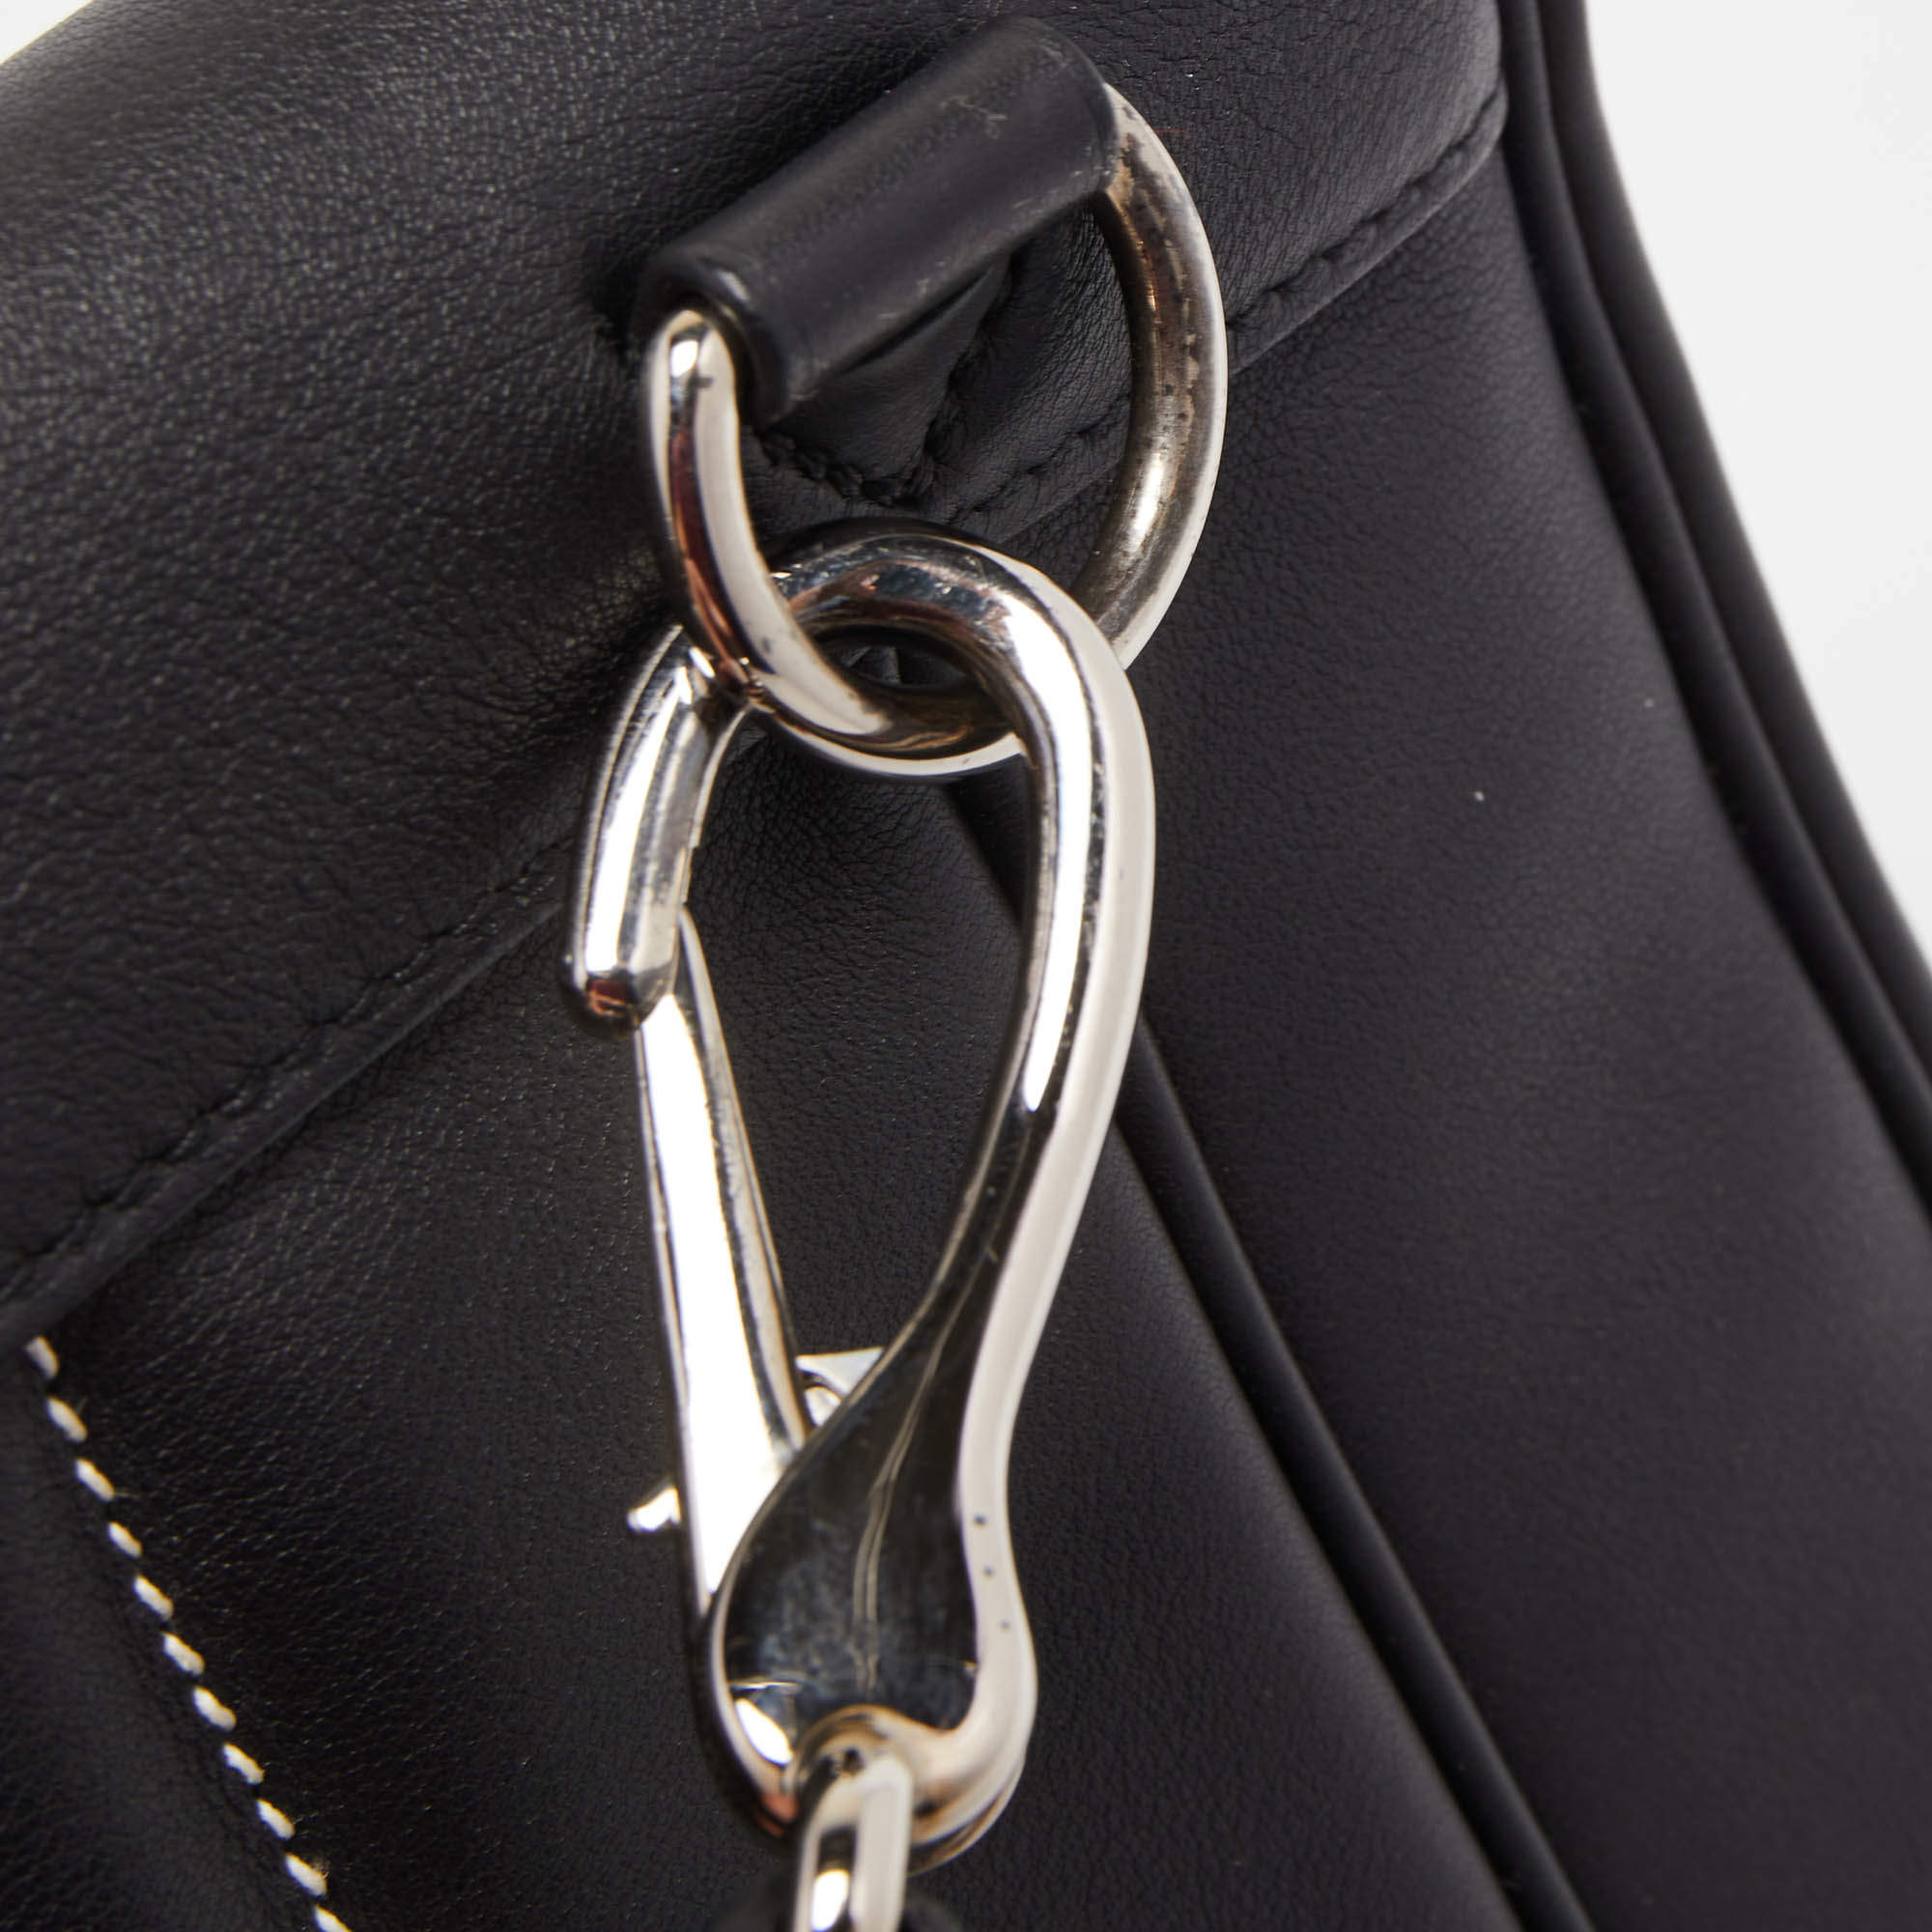 Hermès Berline Leather Handbag